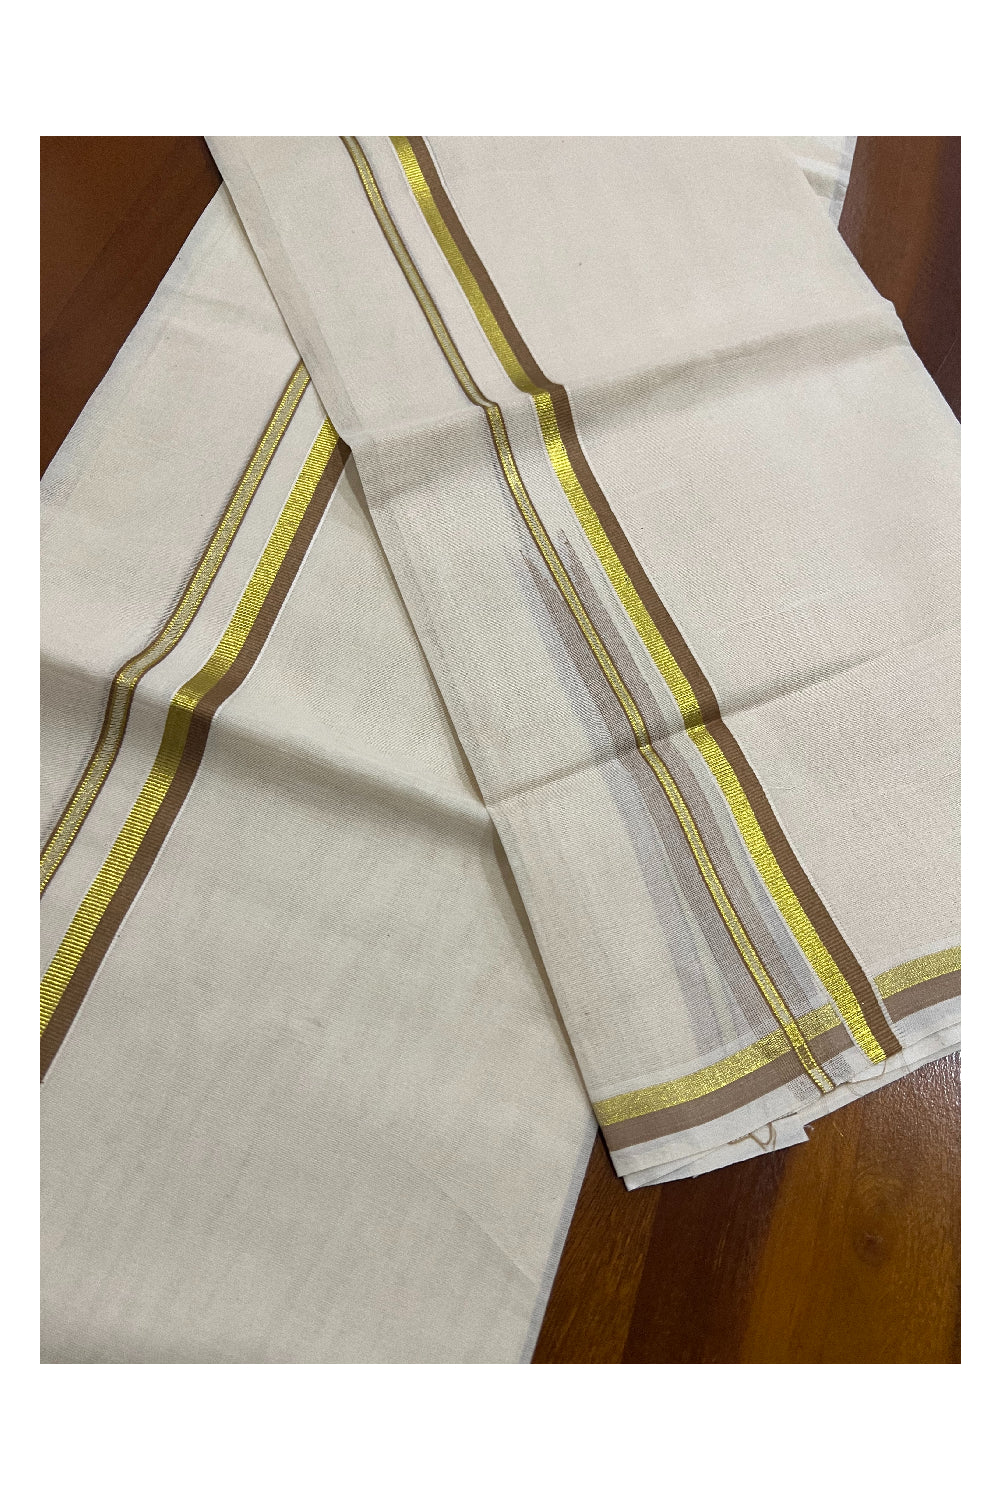 Kerala Cotton Mundum Neriyathum Single (Set Mundu) with Brown and Kasavu Puliyilakkara Border 2.80 Mtrs 100 by 100 Thread Count